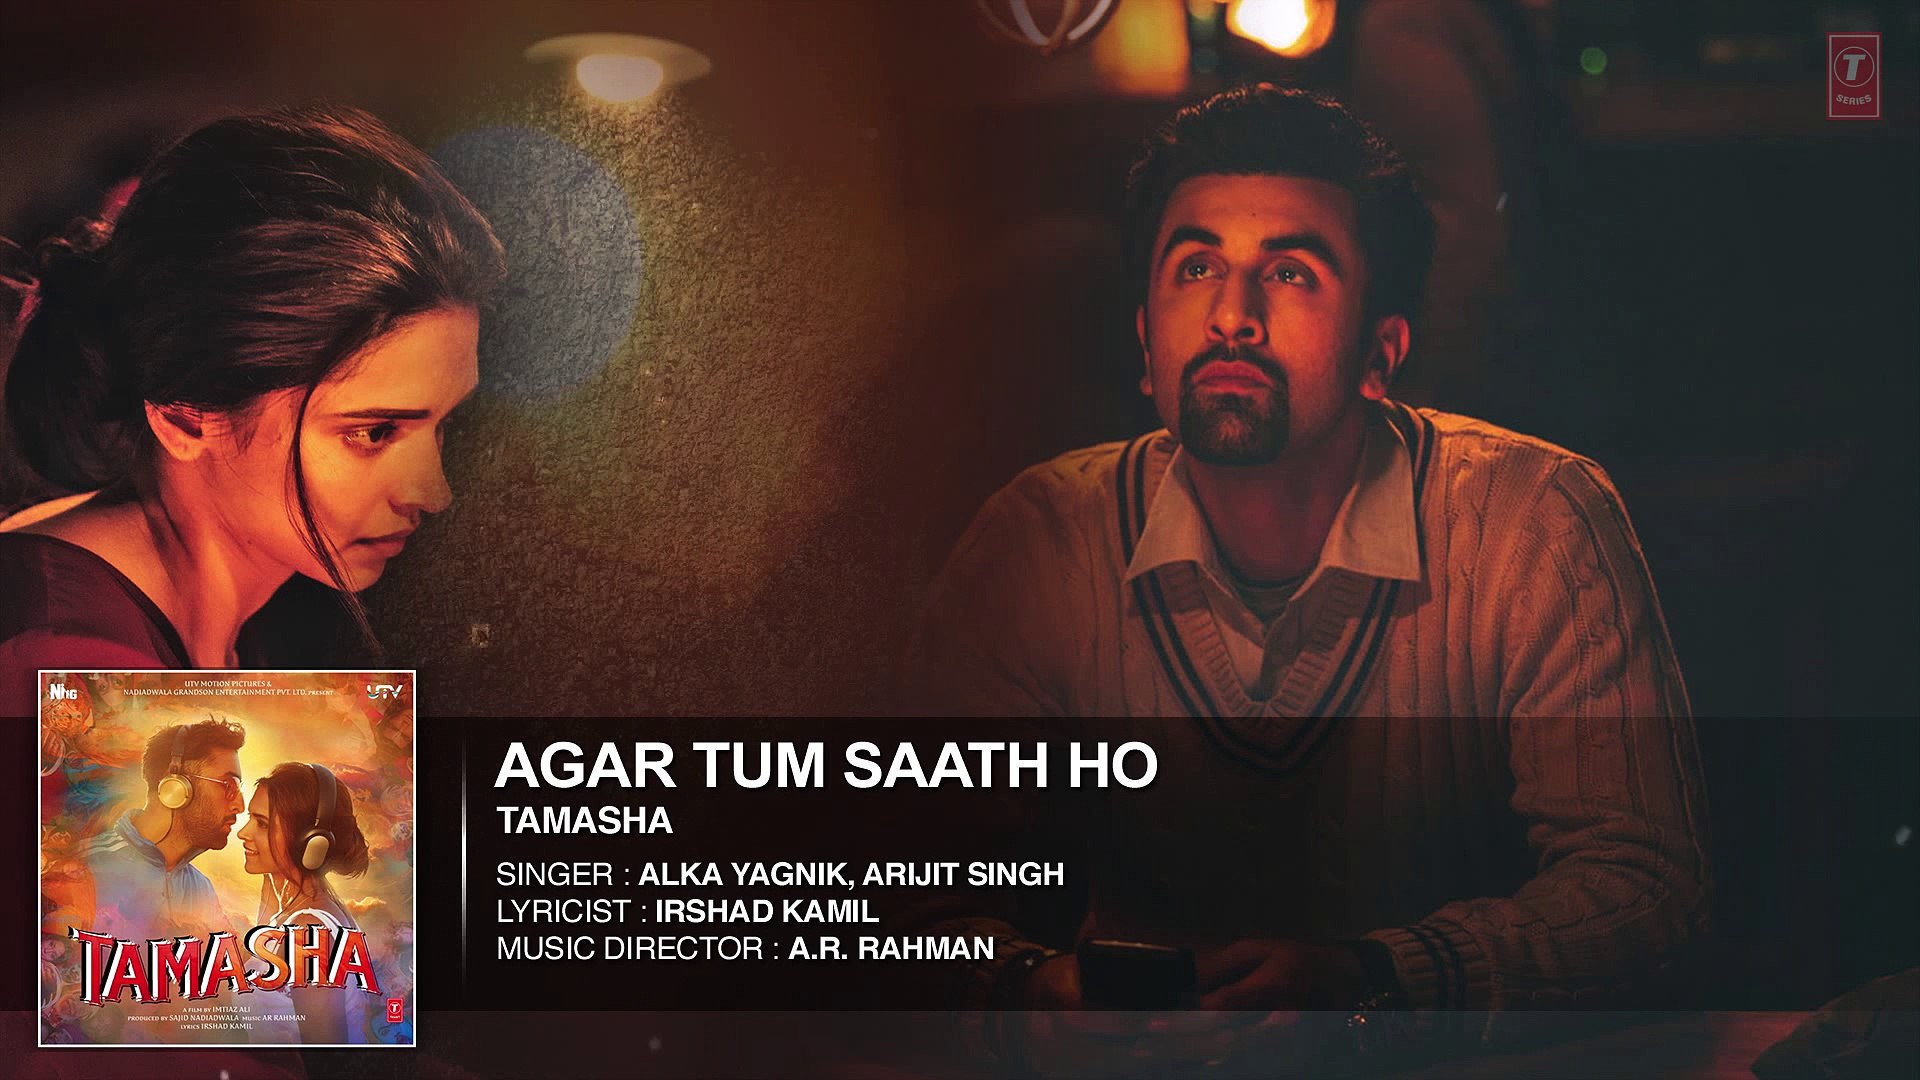 ♫ Agar Tum Saath Ho - Agar tum sath ho - || FULL AUDIO Song || - Film  Tamasha - Starring Ranbir Kapoor, Deepika Padukone - Full HD -  Entertainment City - video Dailymotion